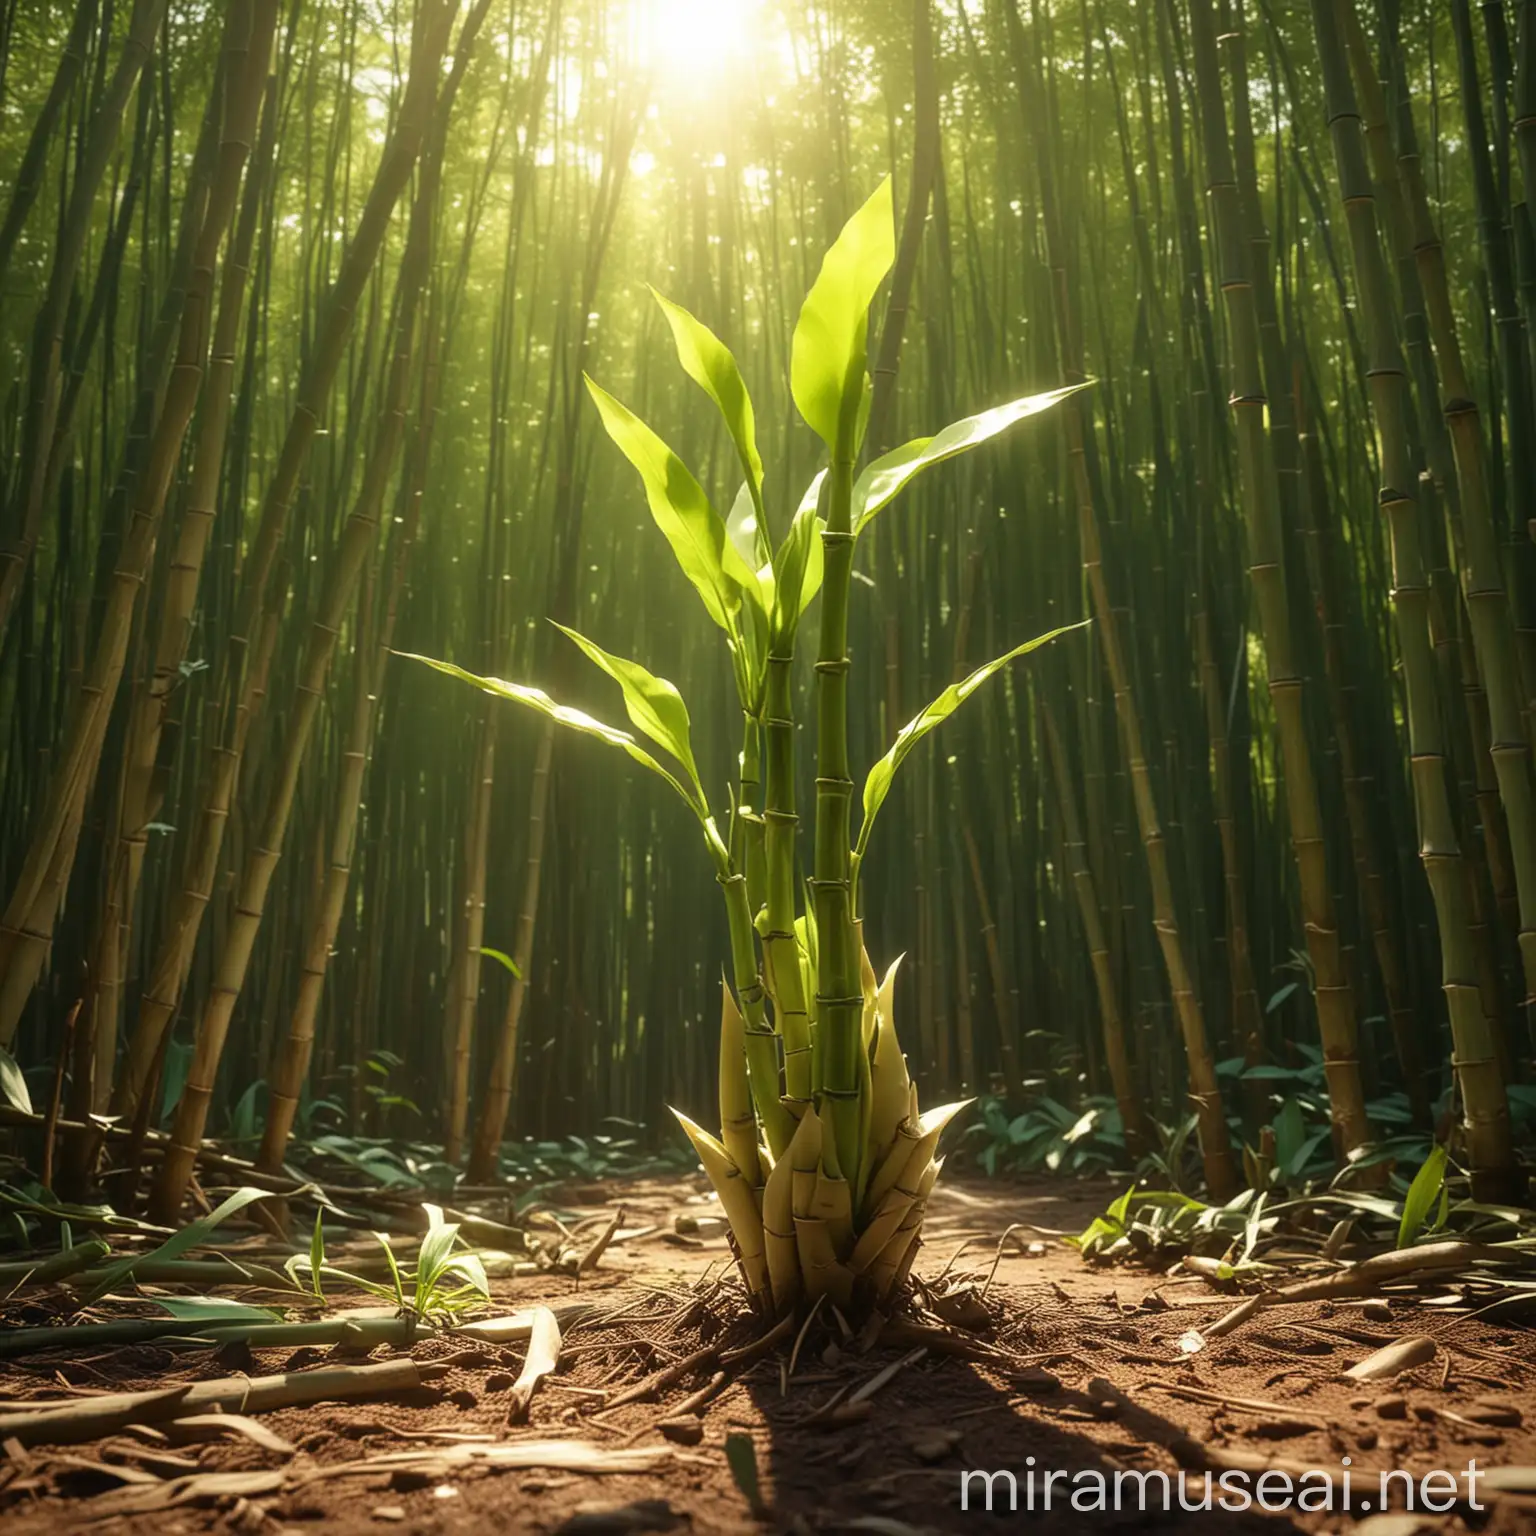 A bamboo shoot growing under the sun，pixar style